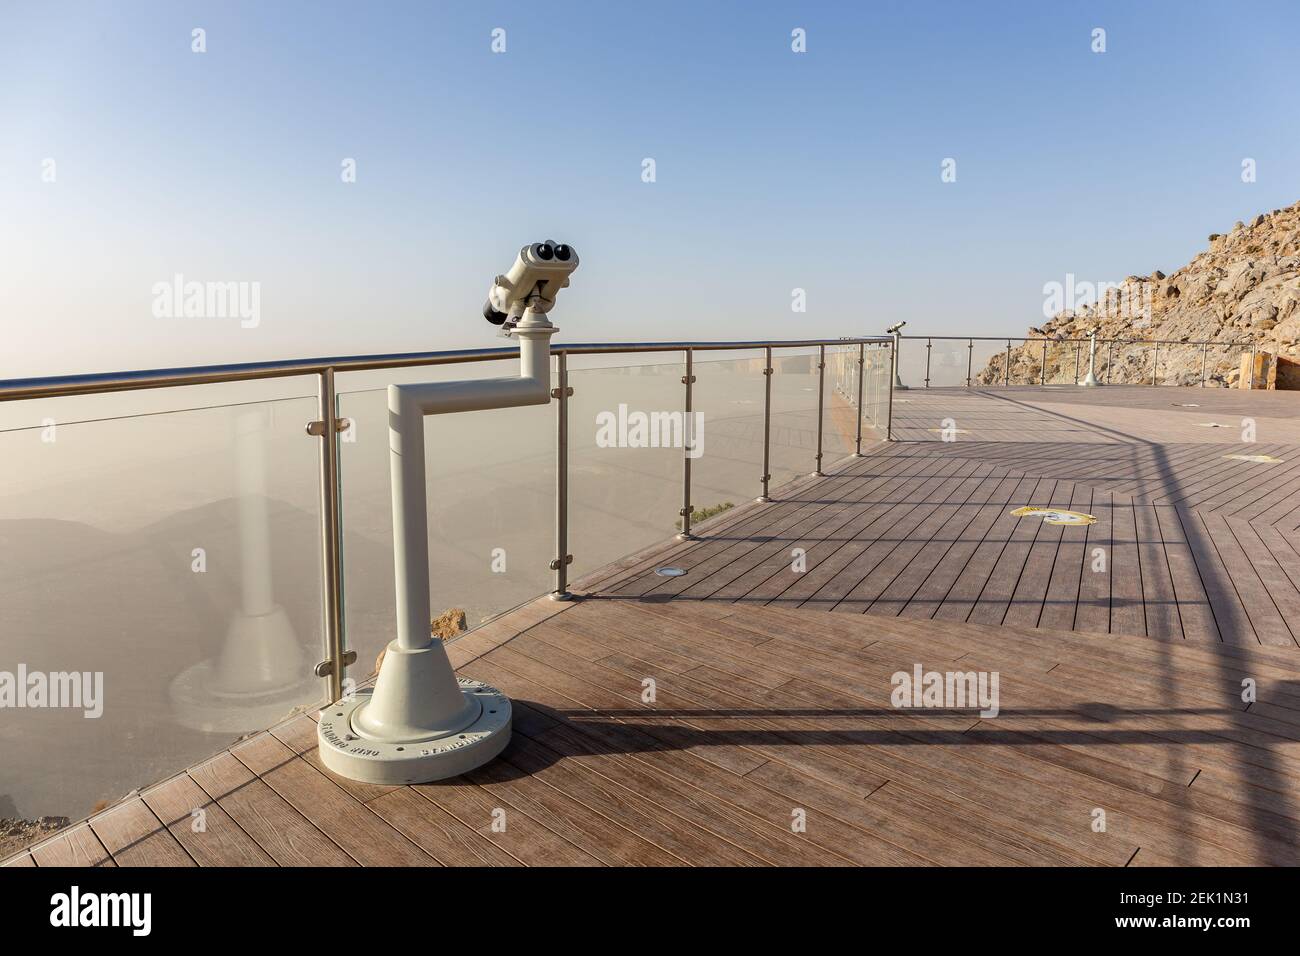 Jebel Jais Viewing Deck Park with coin operated binoculars overlooking Hajar Mountains, UAE. Stock Photo